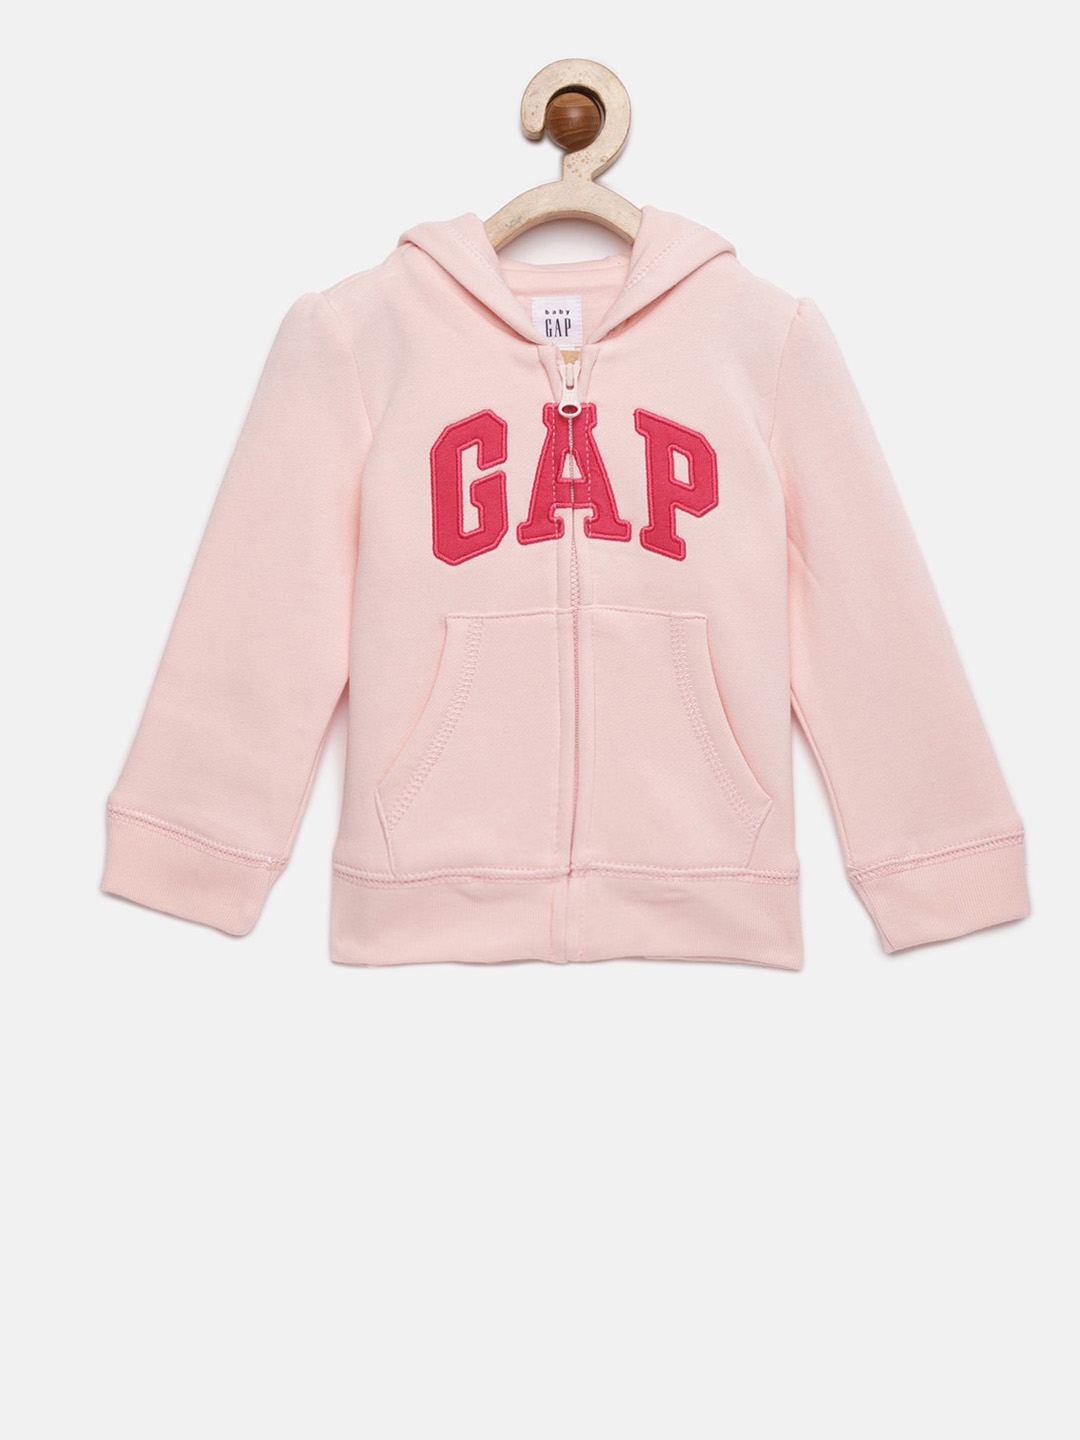 Buy GAP Girls' Pink Solid Hooded Sweatshirt - Sweatshirts for Girls ...